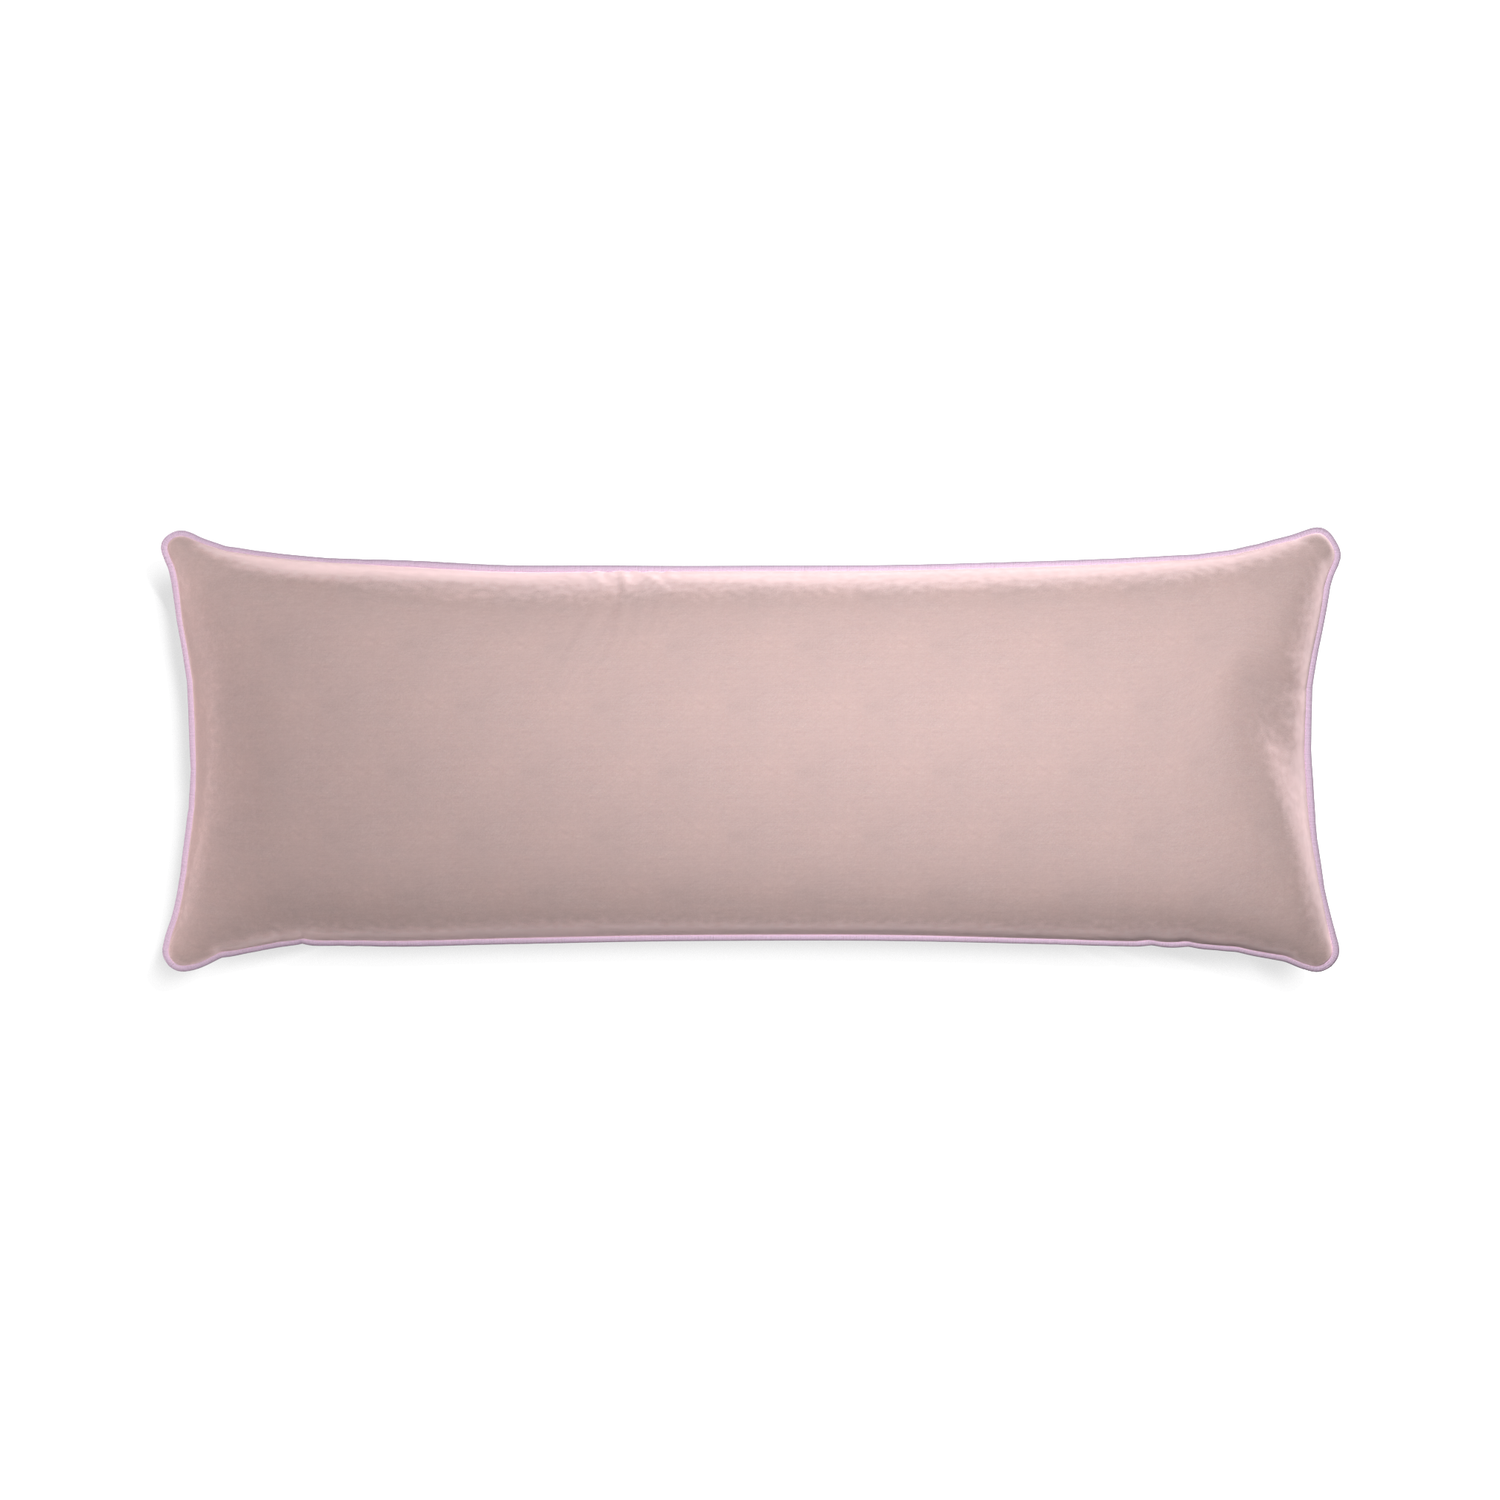 Xl-lumbar rose velvet custom pillow with l piping on white background